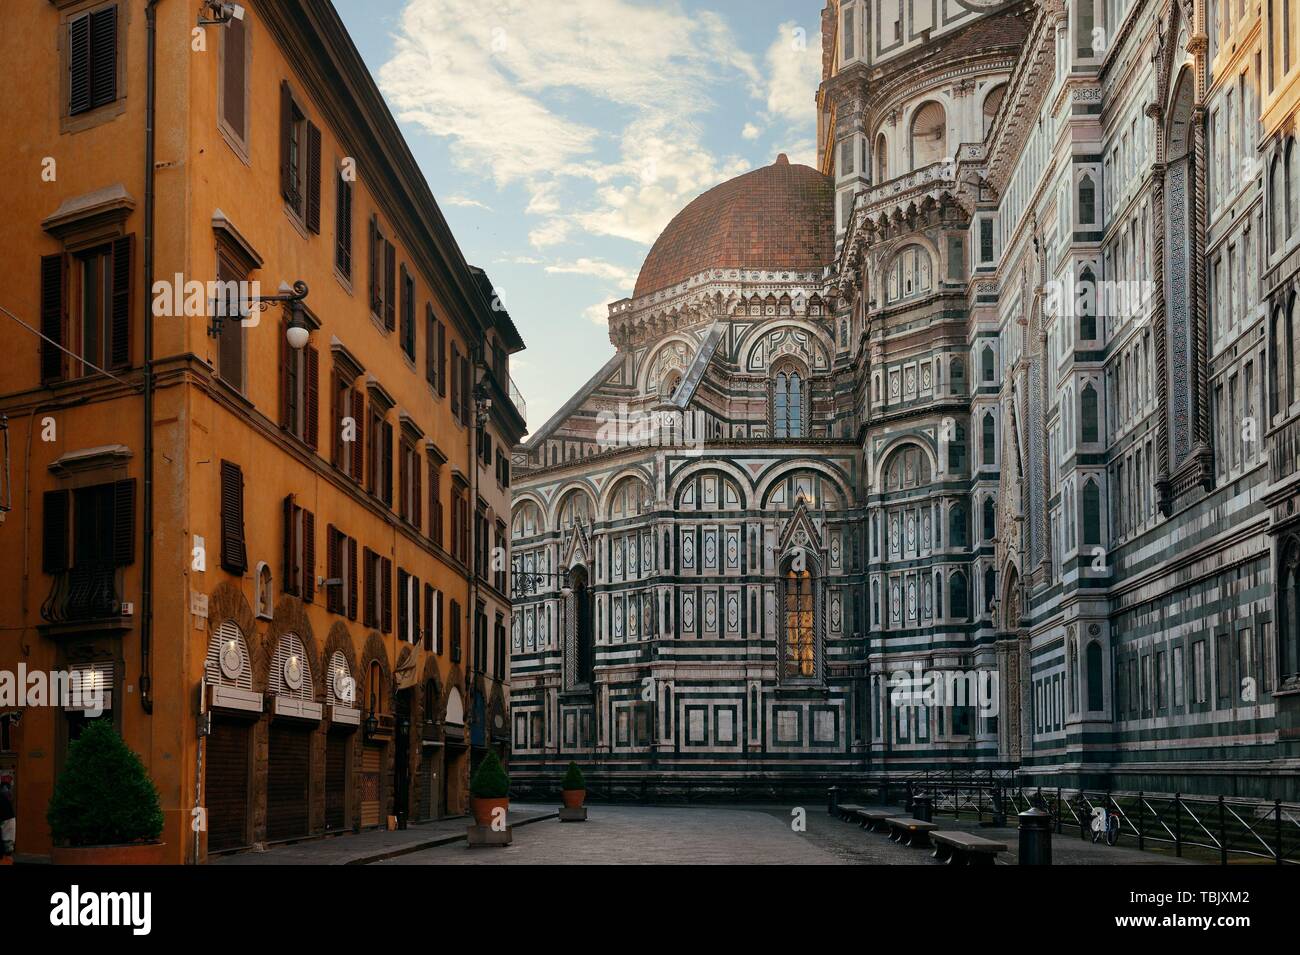 Duomo Santa Maria Del Fiore in Florence Italy closeup view. Stock Photo